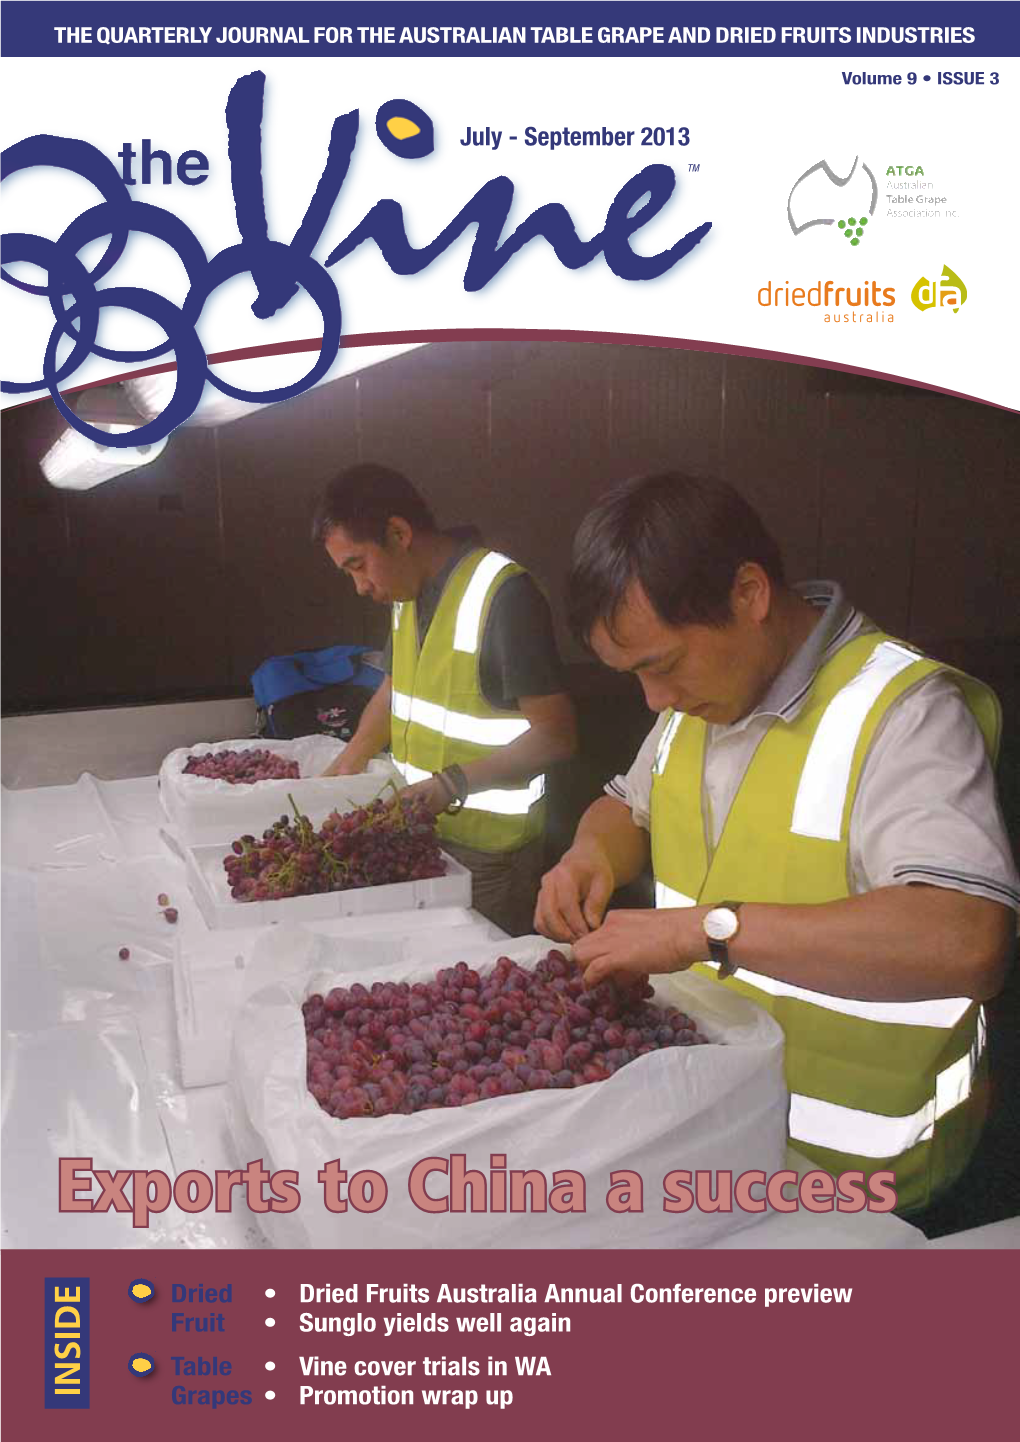 Exports to China a Success